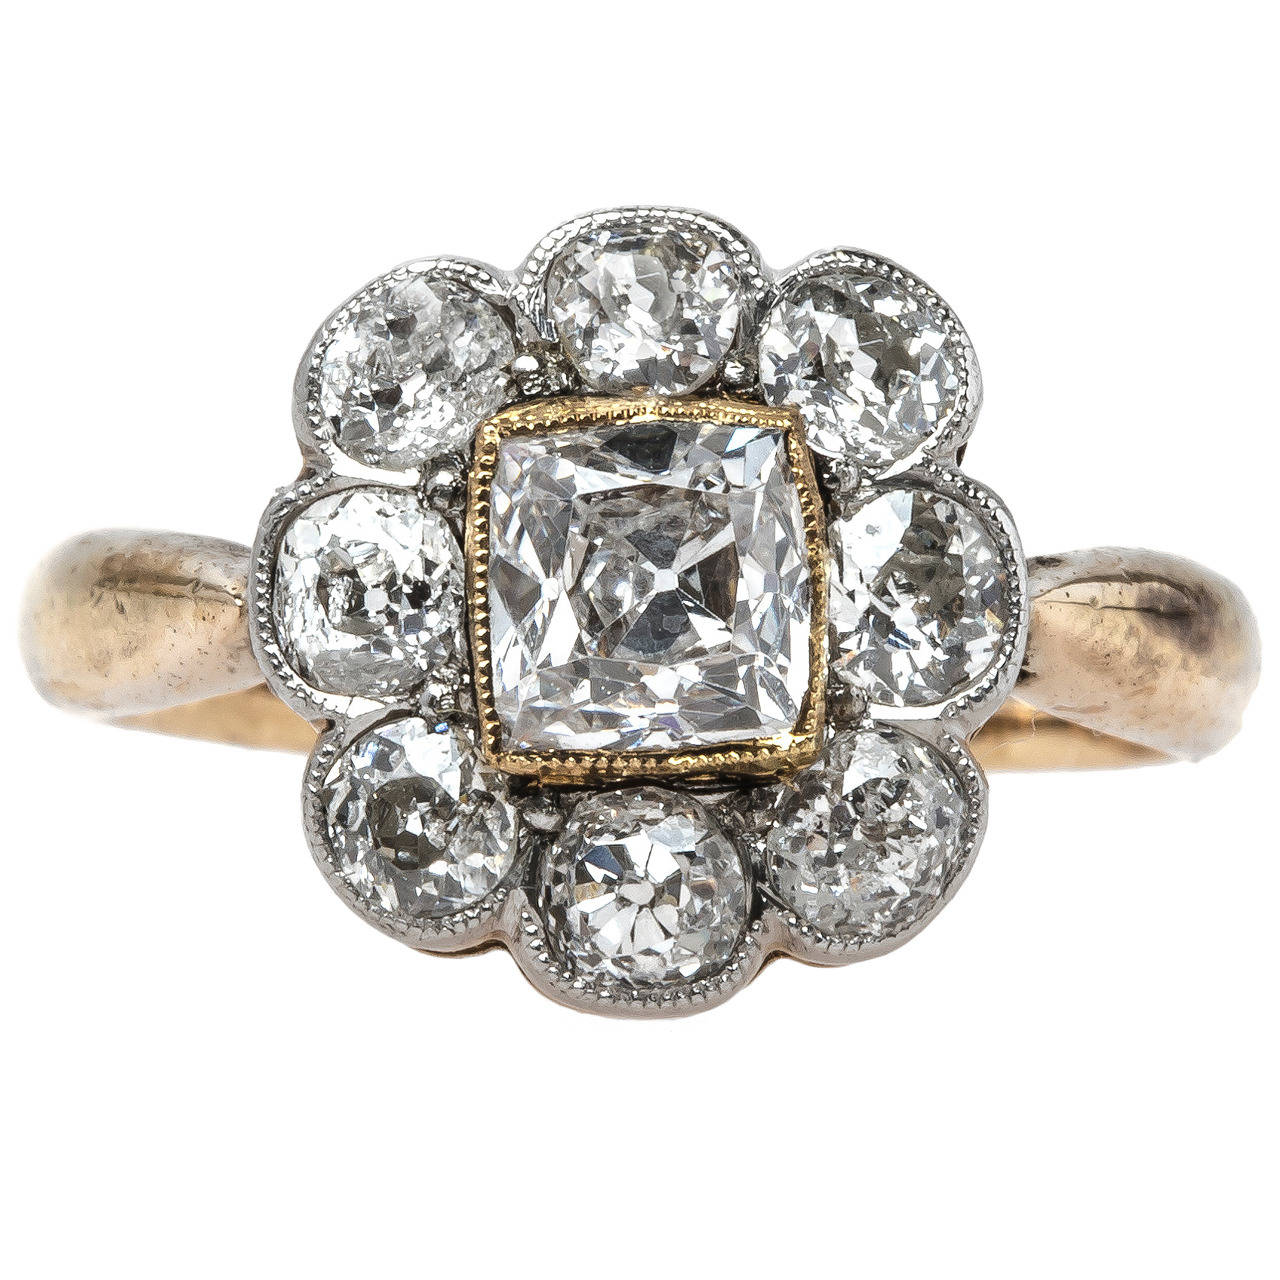 Unique Victorian Era Halo Engagement Ring with Cushion Square Diamond Center